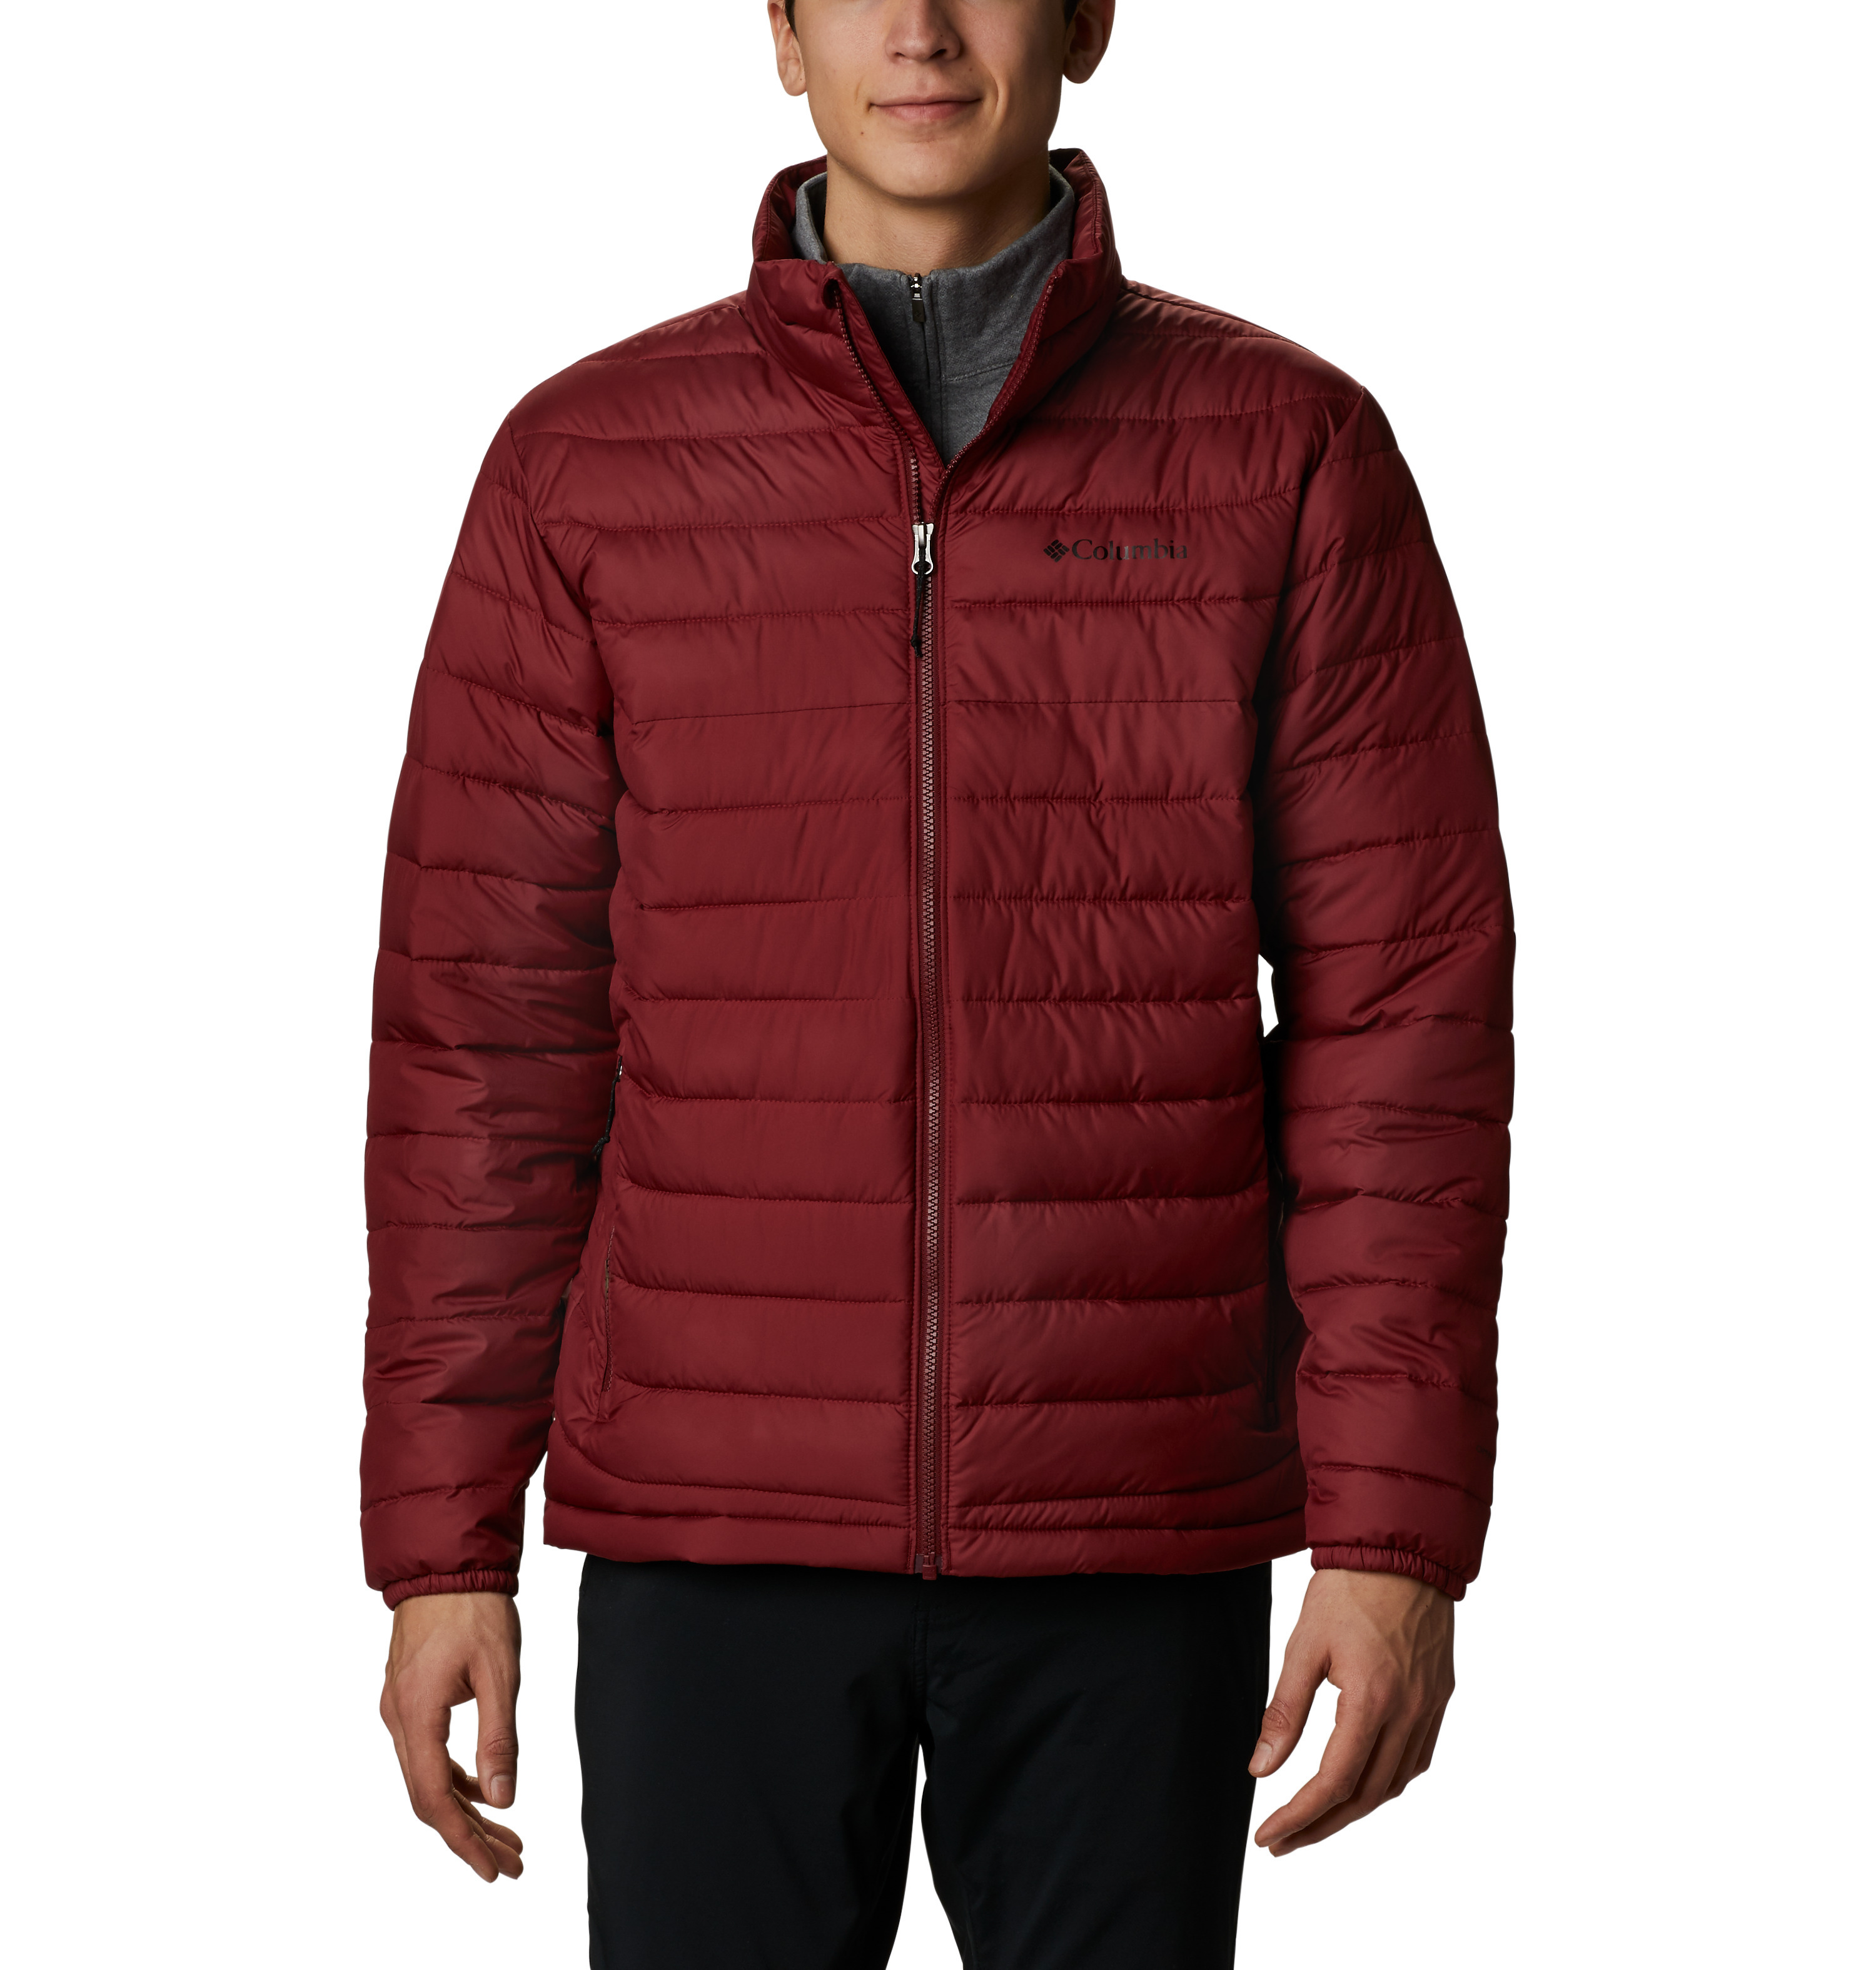 Ropa de abrigo Columbia POWDER LITE™ - Anorak hombre red element - Private  Sport Shop